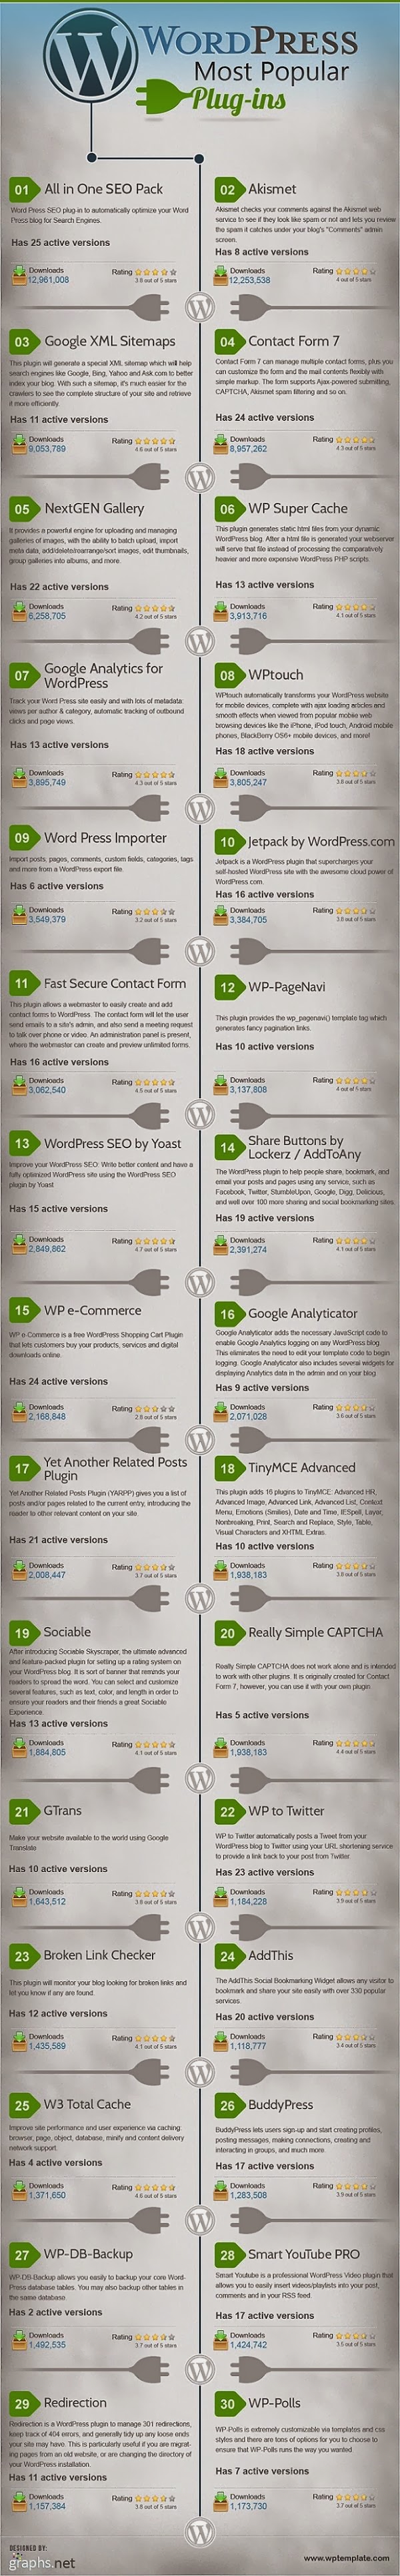 [Infographie] Les 30 plus populaires plugins WordPress